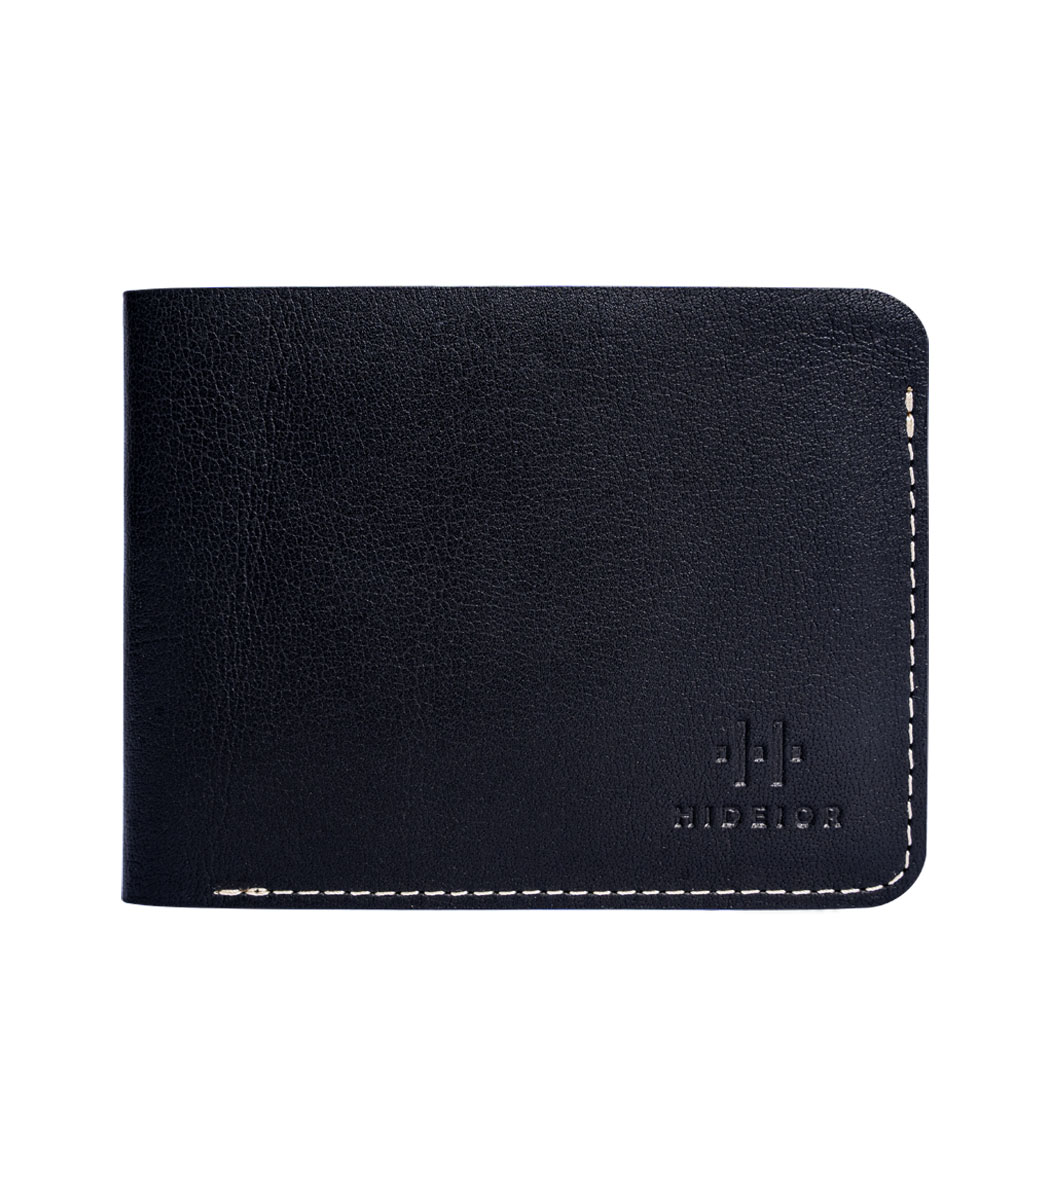 wallet-classic-black